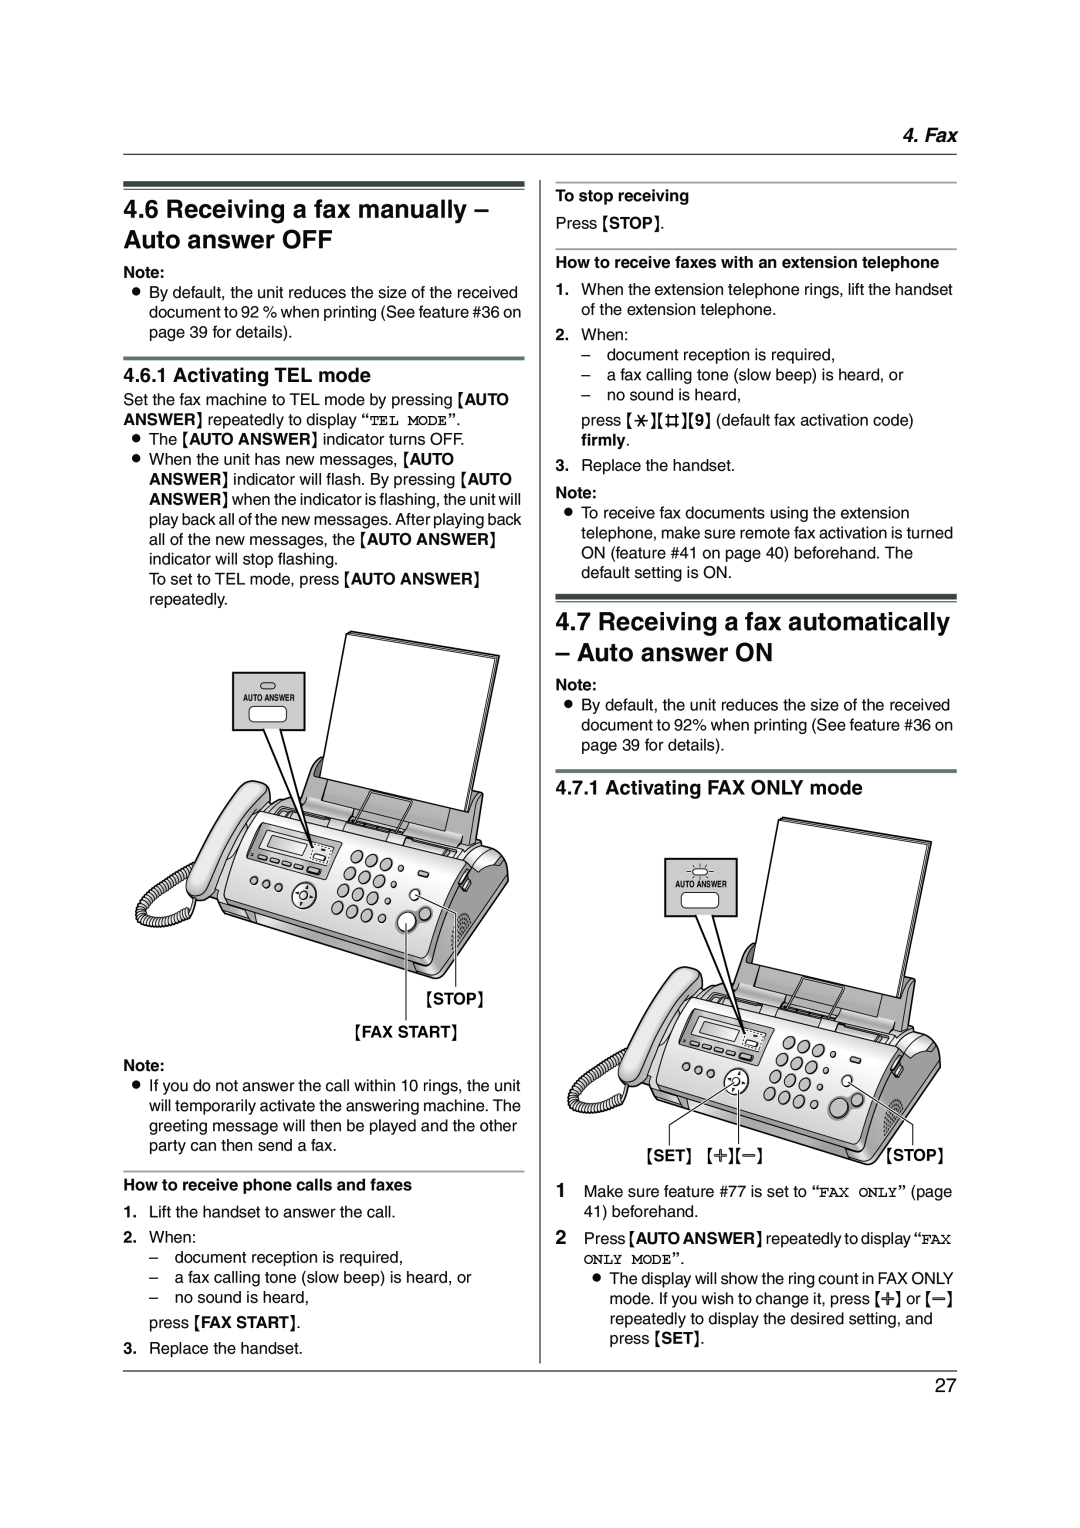 Panasonic KX-FP215 Receiving a fax manually - Auto answer OFF, Receiving a fax automatically Auto answer ON, Fax 